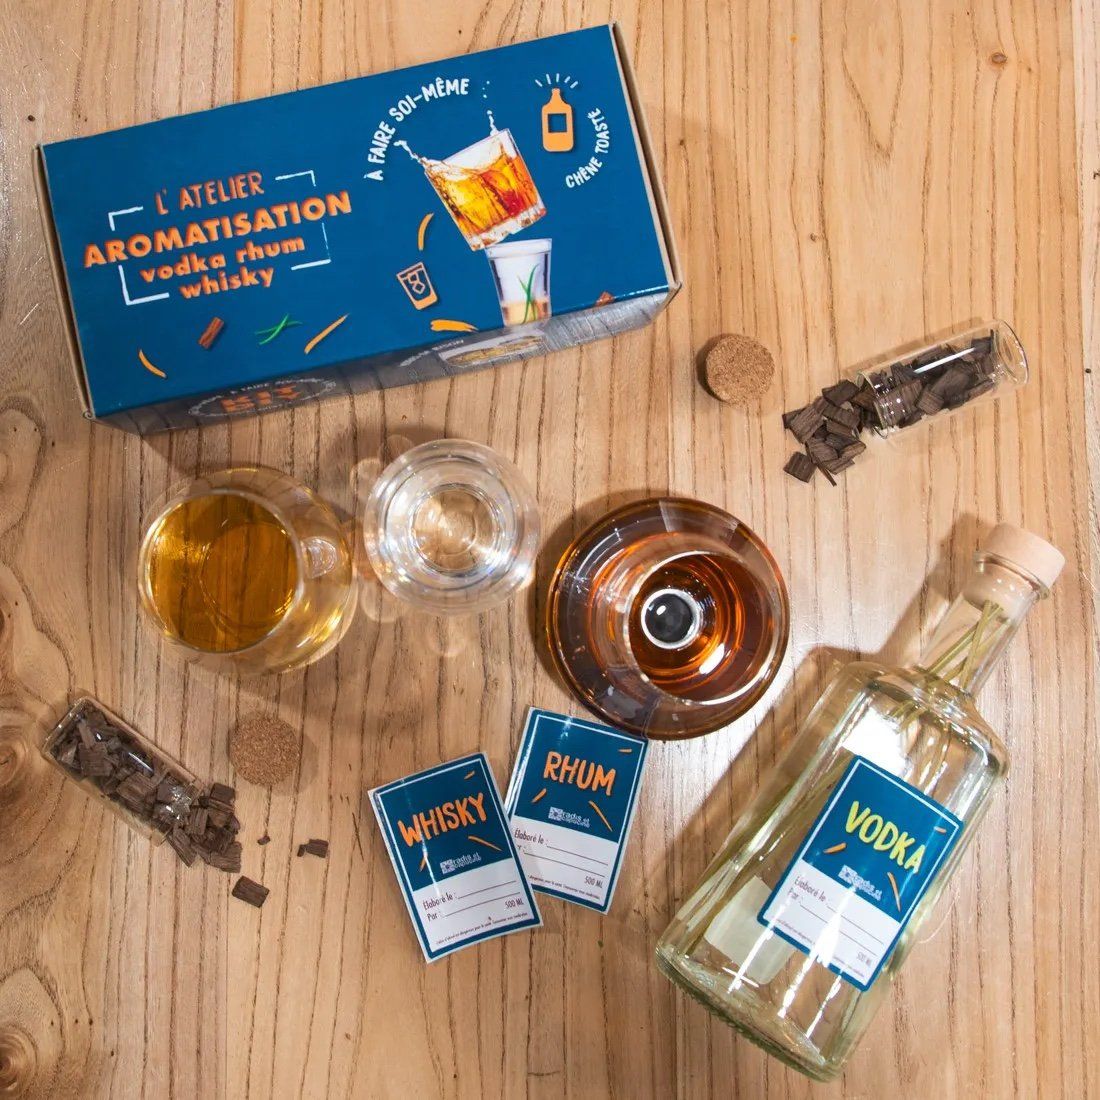 Atelier aromatisation Rhum, Vodka, Whisky - Coffret DIY Radis et Capucine 